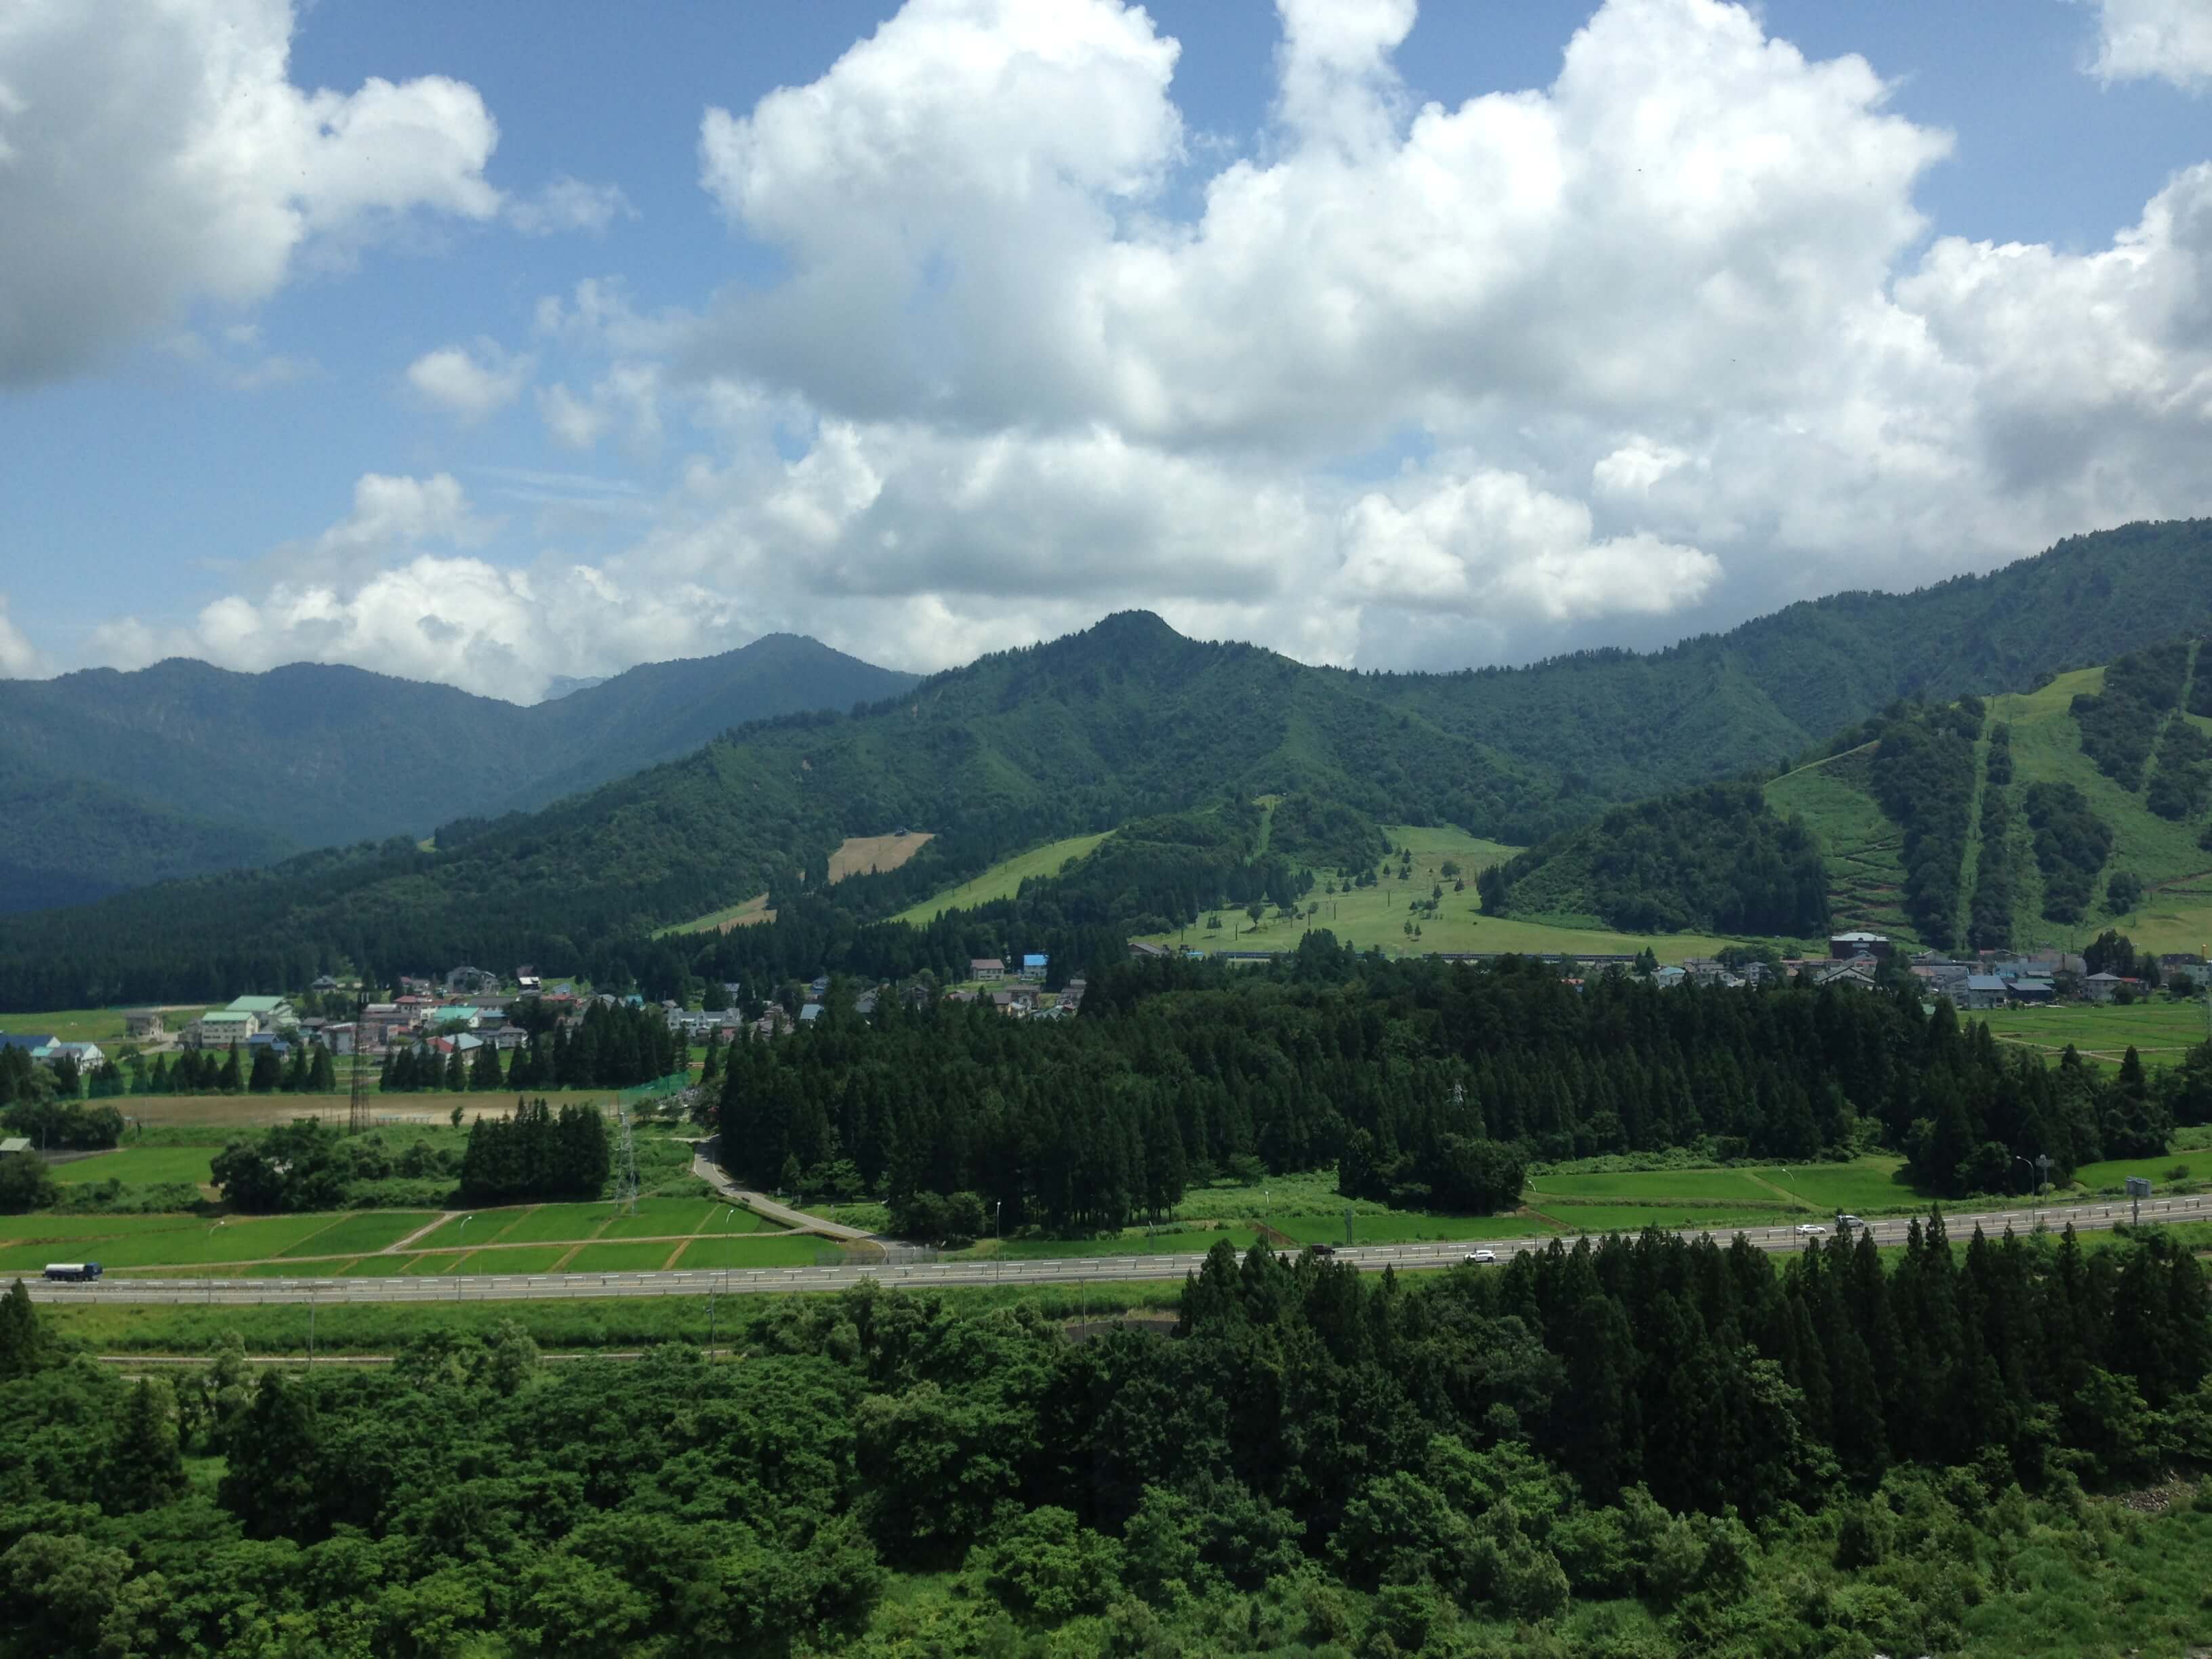 Yuzawa Japan summer scenery, visiting Yuzawa Japan, adventure and skiing in the Japanese Mountains.